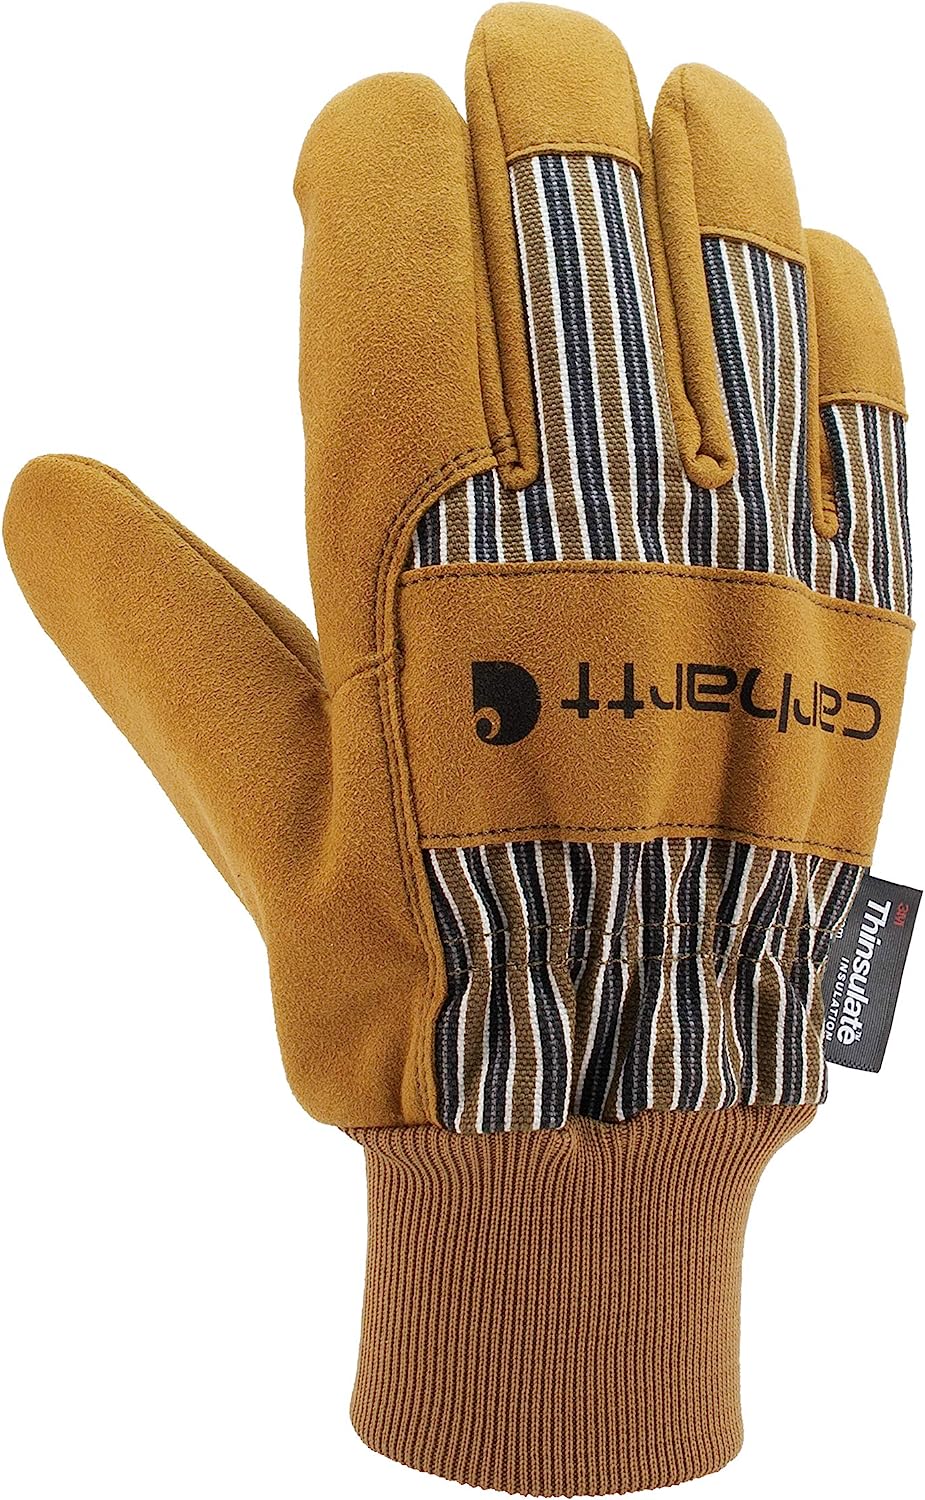 Carhartt Men's Insulated Suede Work Glove with Knit Cuff